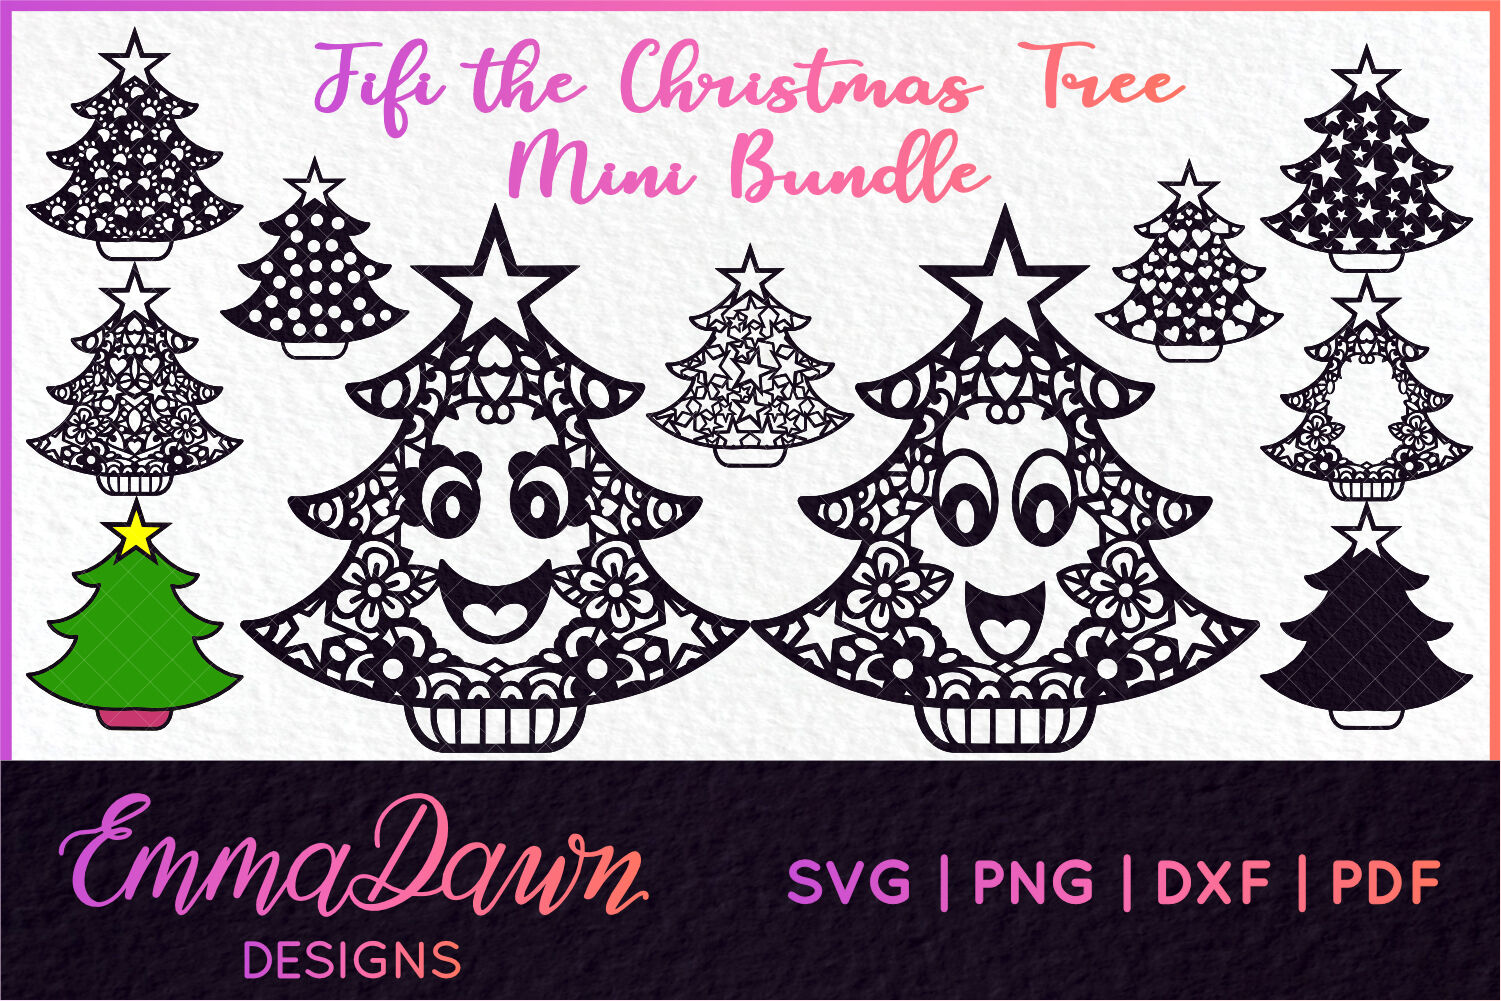 Download Fifi The Christmas Tree Mini Bundle Mandala Zentangle Designs By Emma Dawn Designs Thehungryjpeg Com